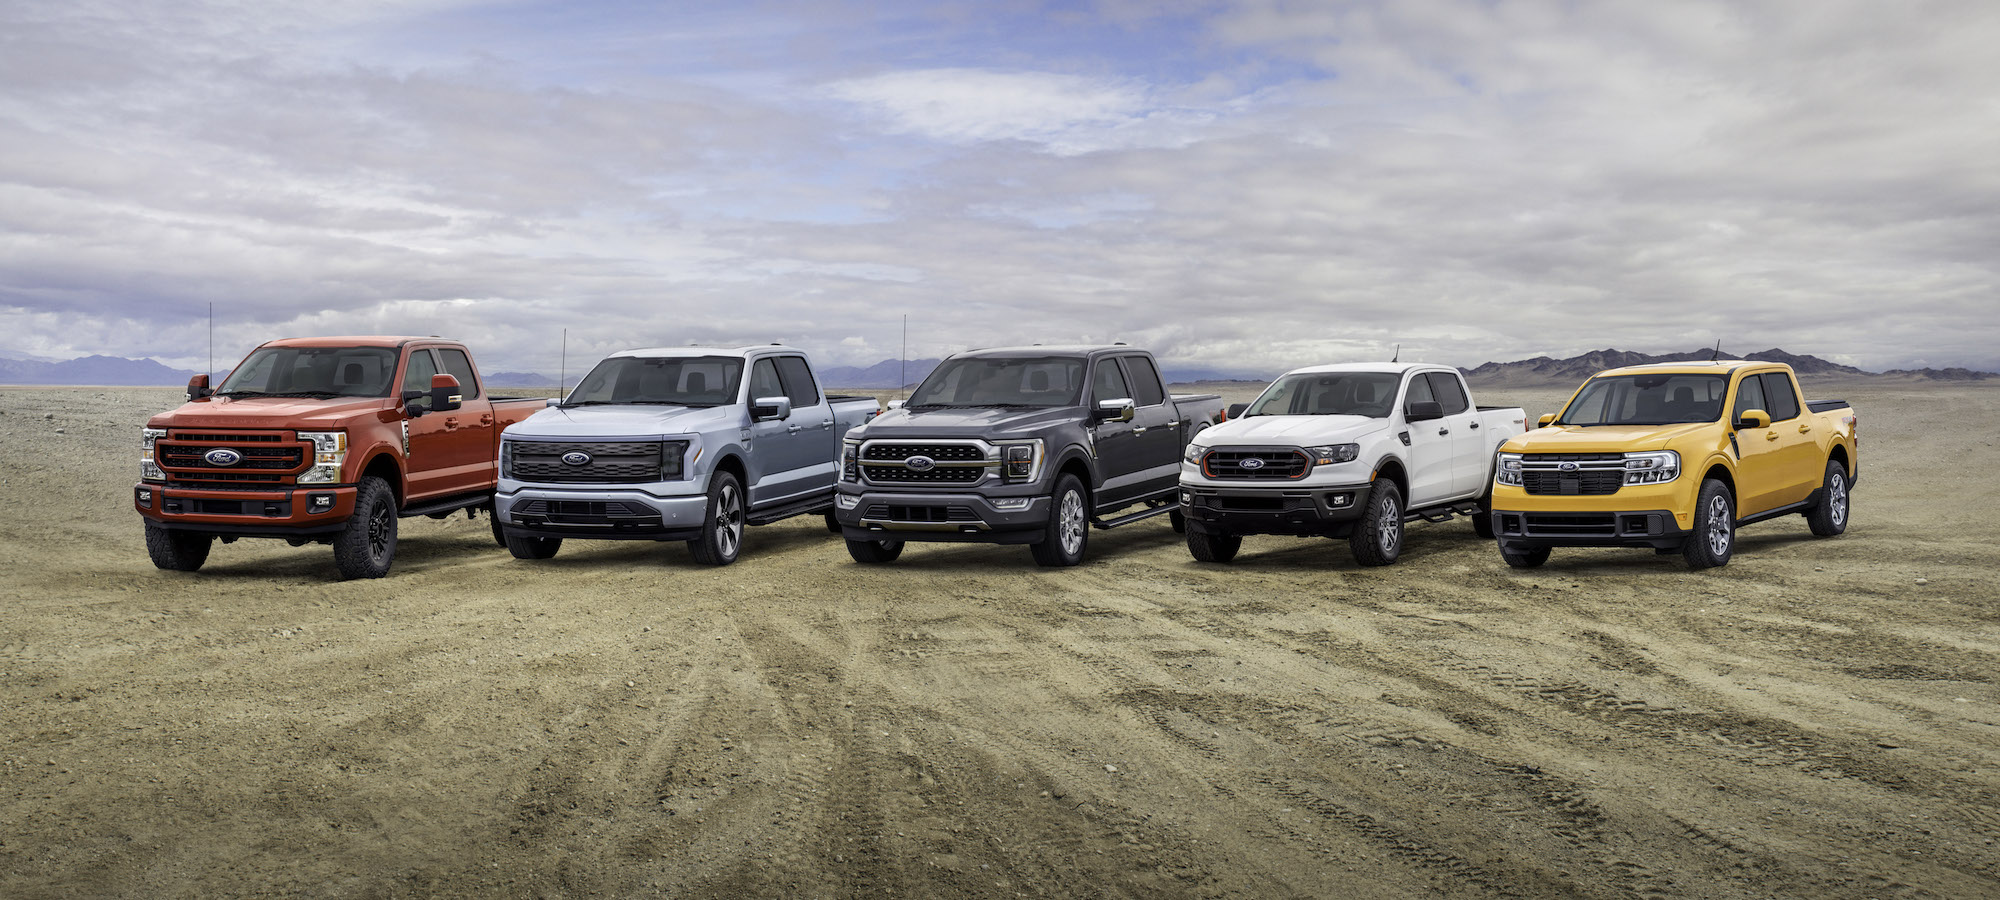 Ford truck lineup: F-250, F-150 Lightning, F-150, Ranger, and Maverick